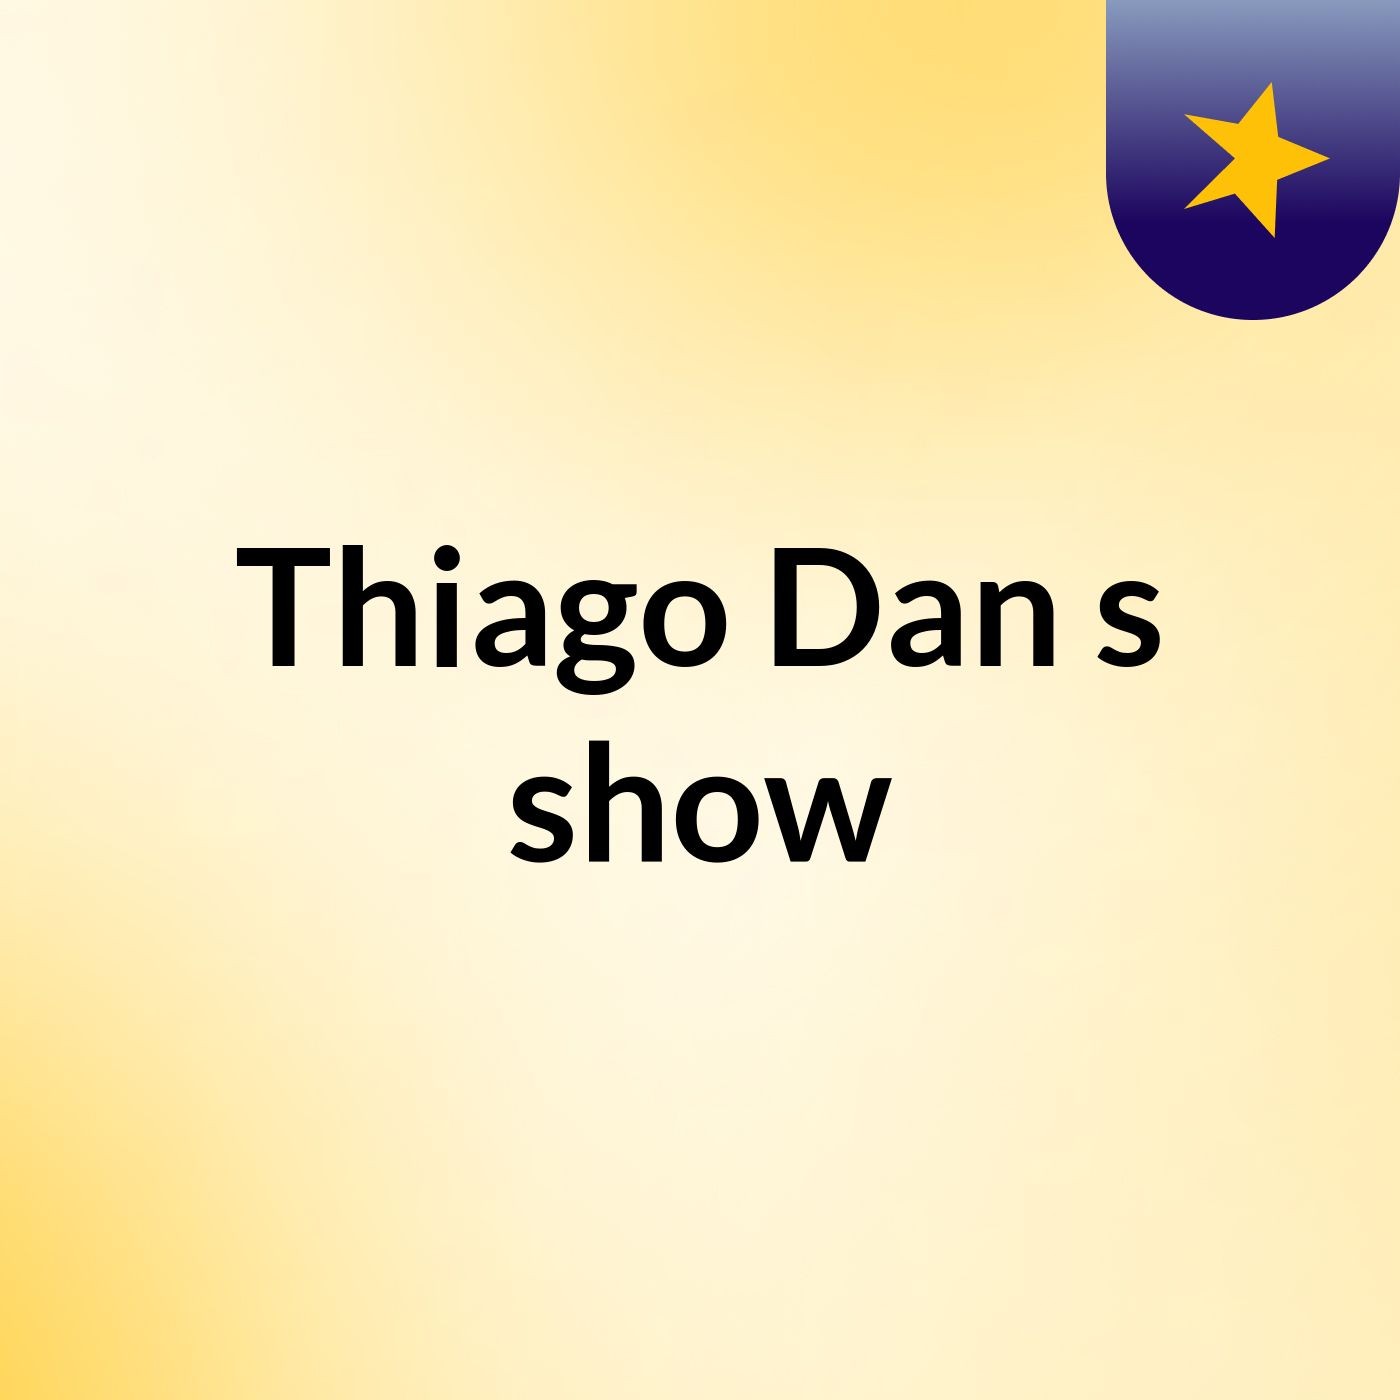 Thiago Dan's show